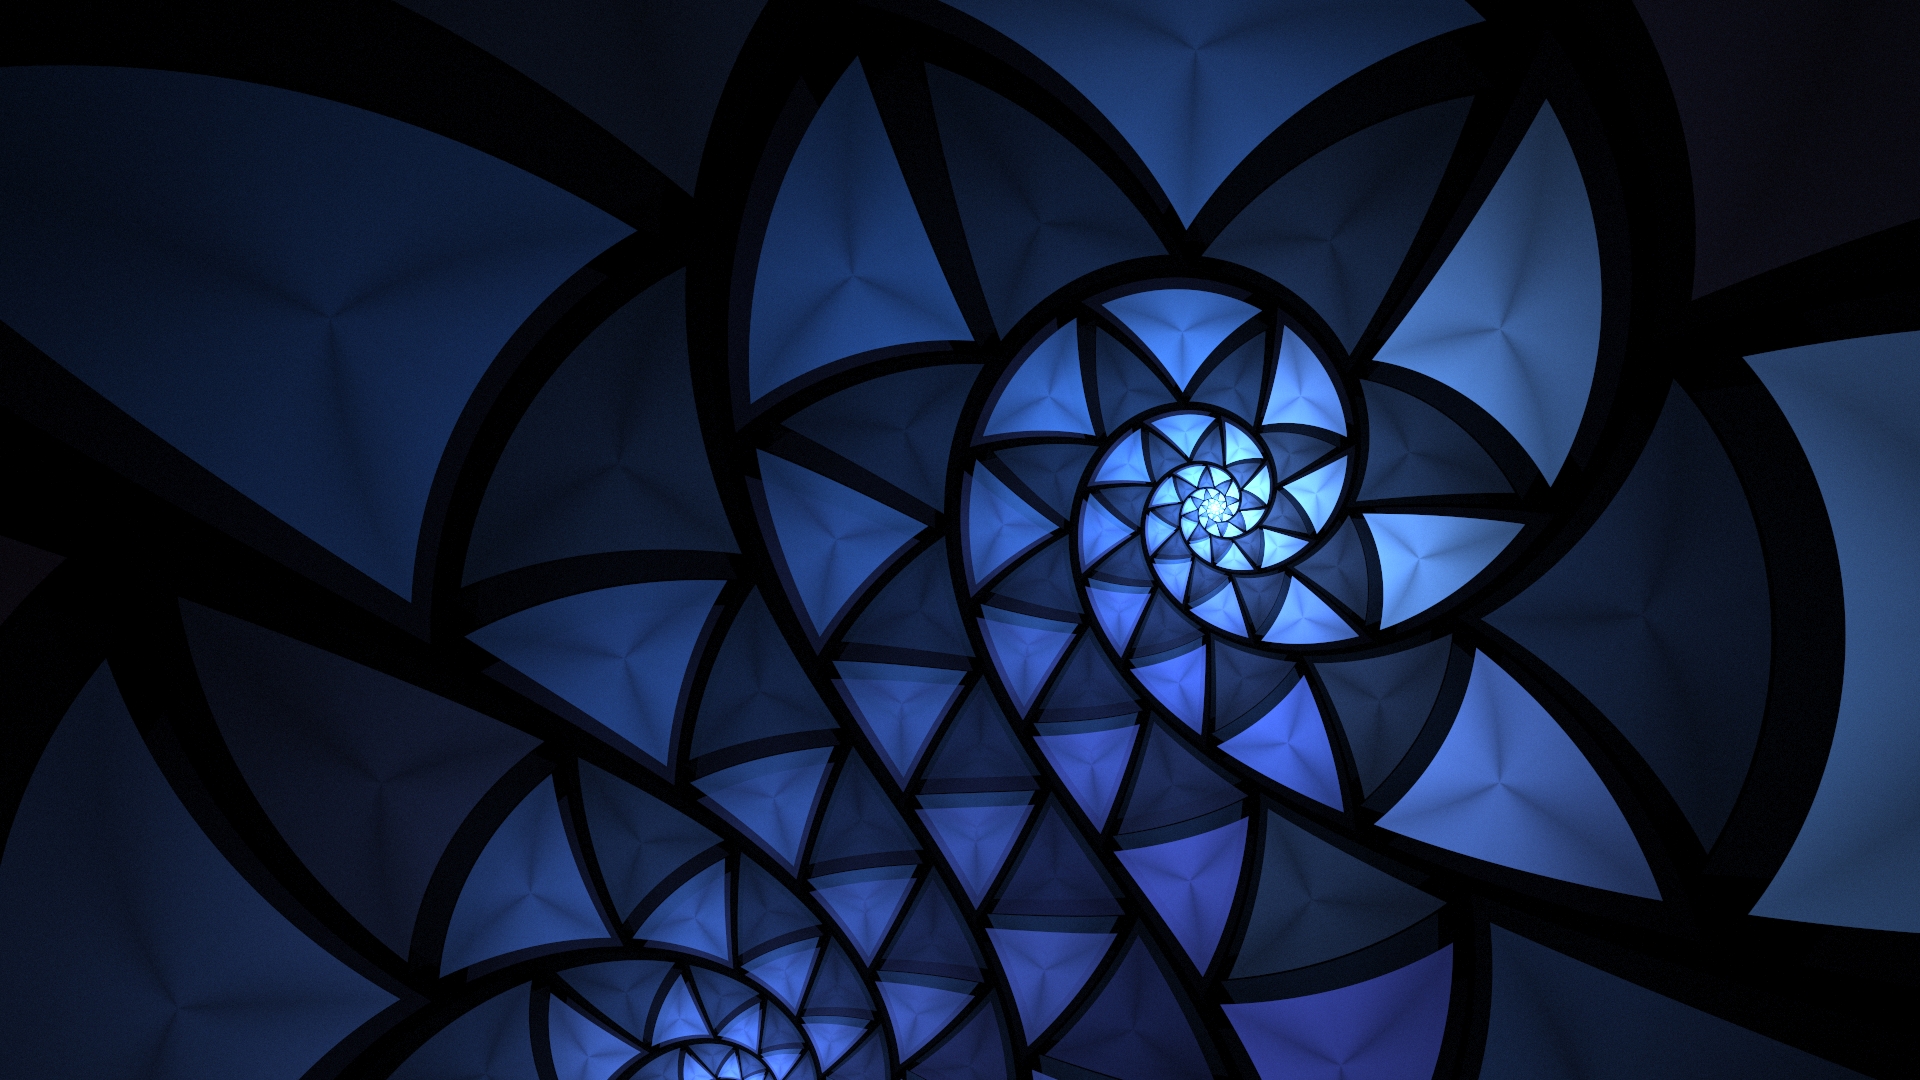 Abstract Spiral Blue 1920x1080